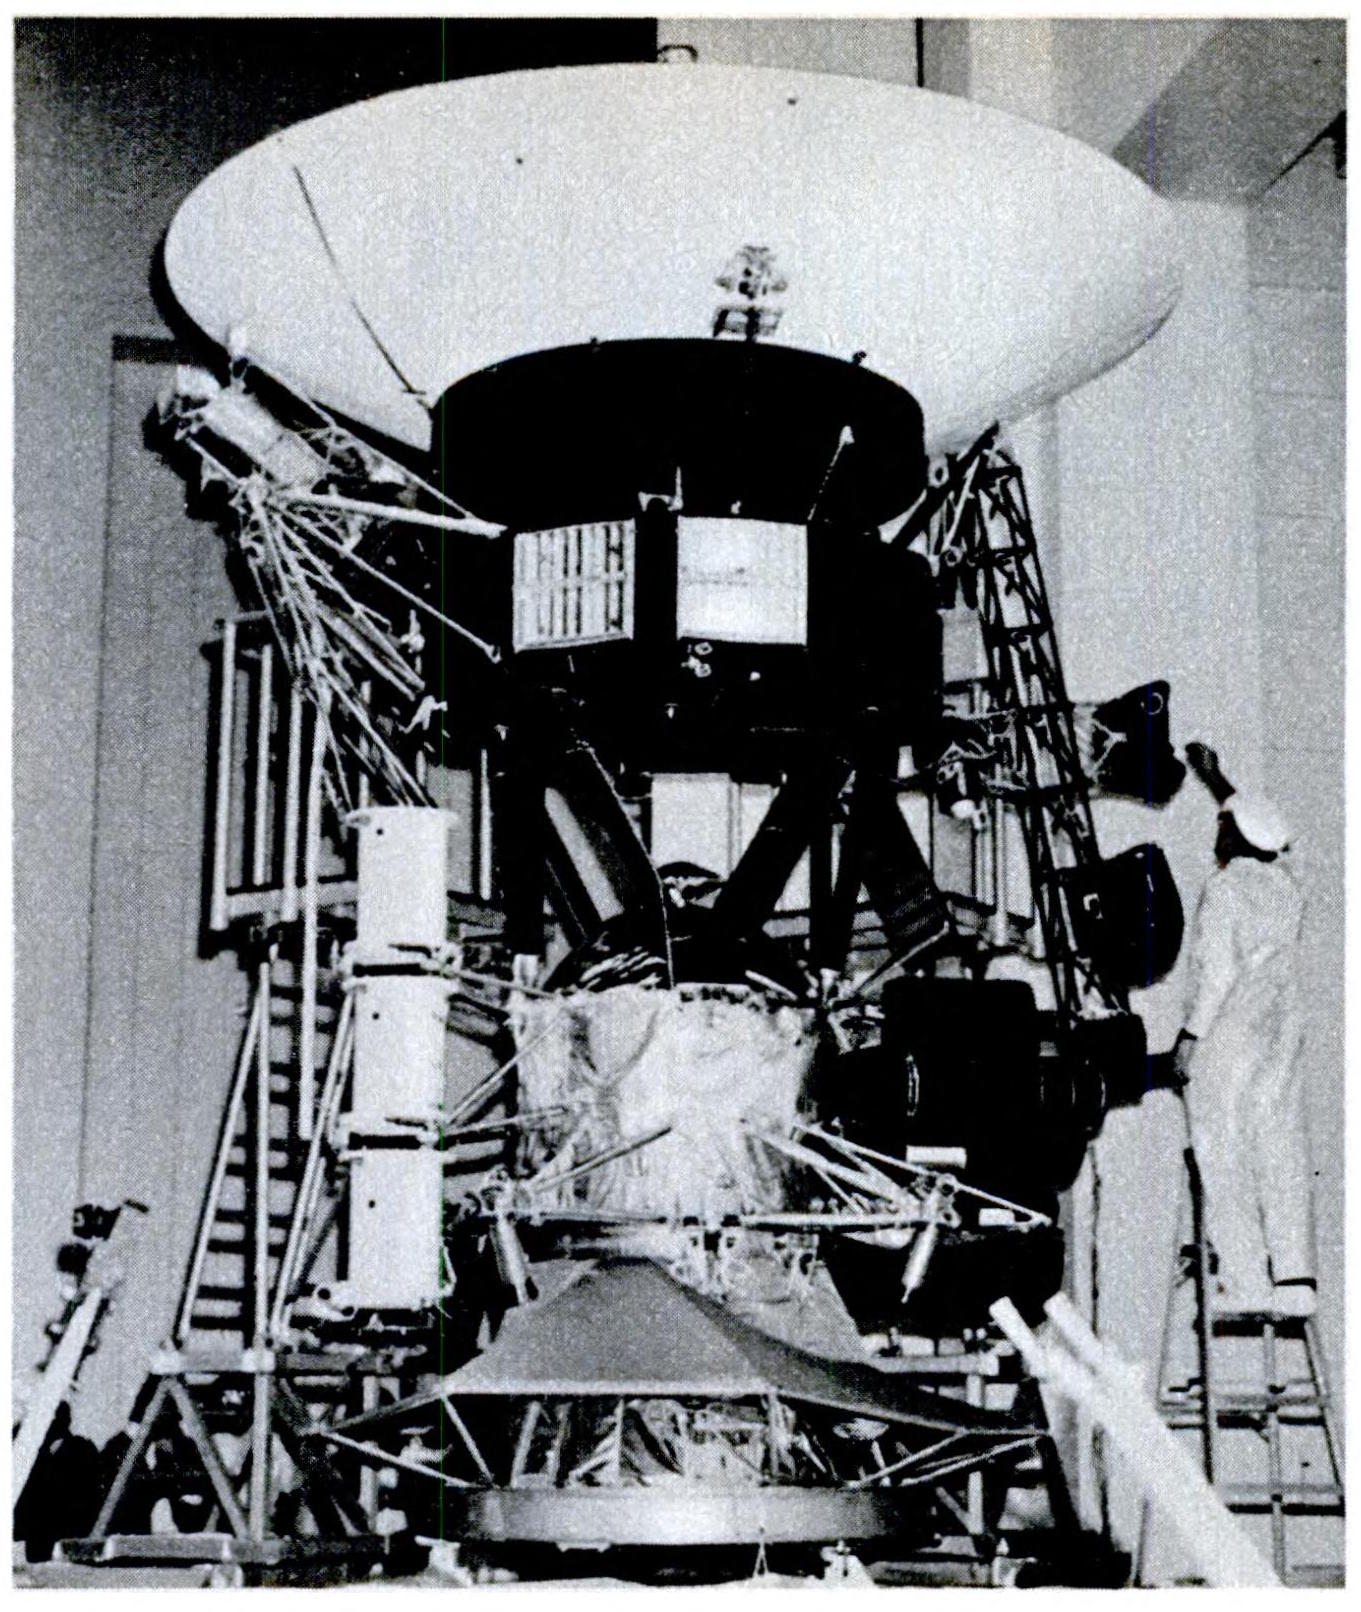 Voyager Spacecraft at NASA's Jet Propulsion Laboratory